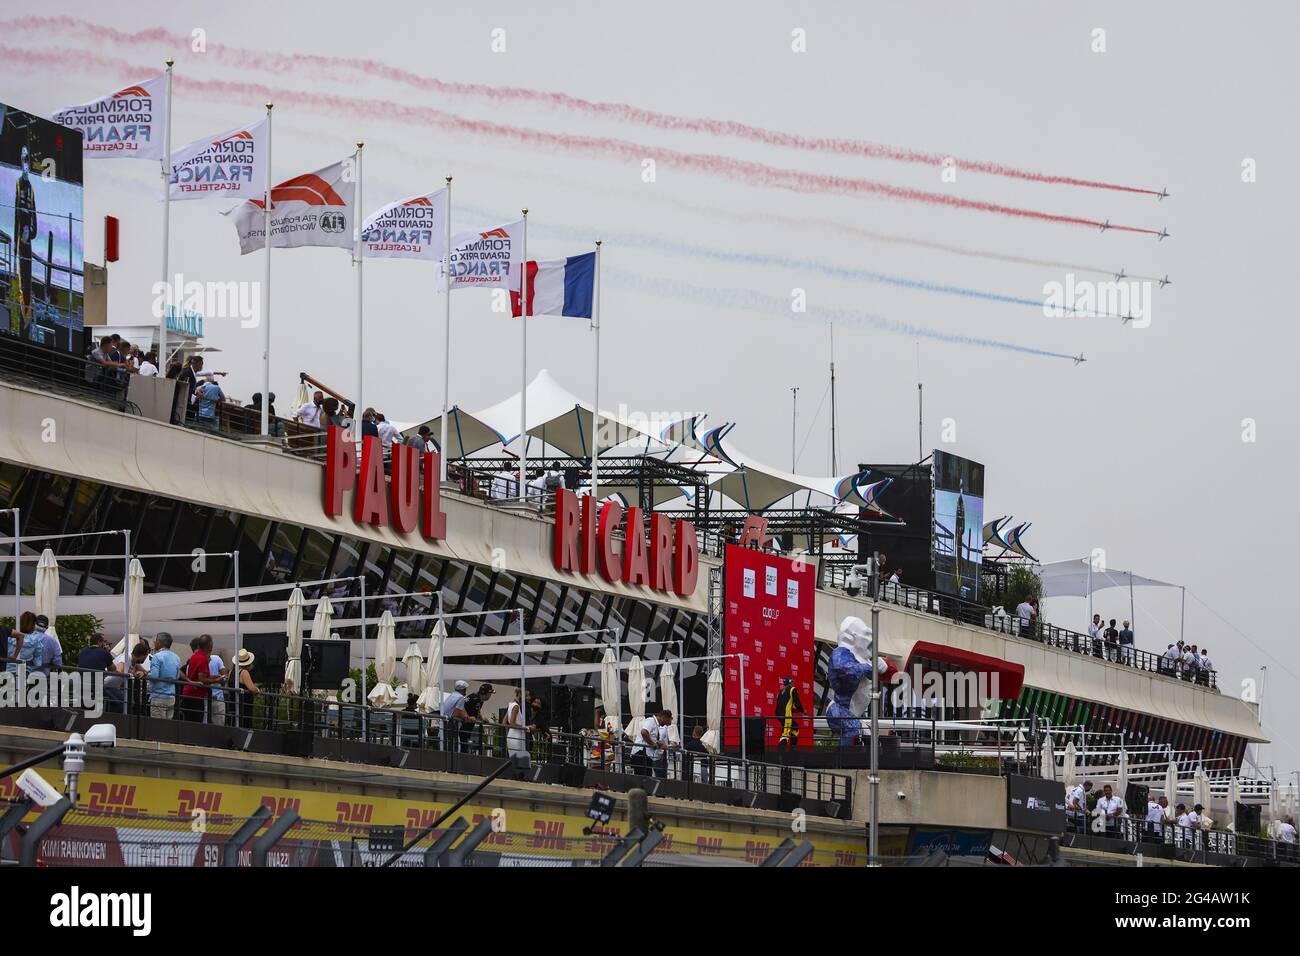 Show Ruban de la PAF während des Formel 1 Emirates Grand Prix de France 2021, 7. Lauf der FIA Formel 1 Weltmeisterschaft 2021 vom 18. Bis 20. Juni 2021 auf dem Circuit Paul Ricard, in Le Castellet, Frankreich - Foto Antonin Vincent / DPPI / LiveMedia Stockfoto